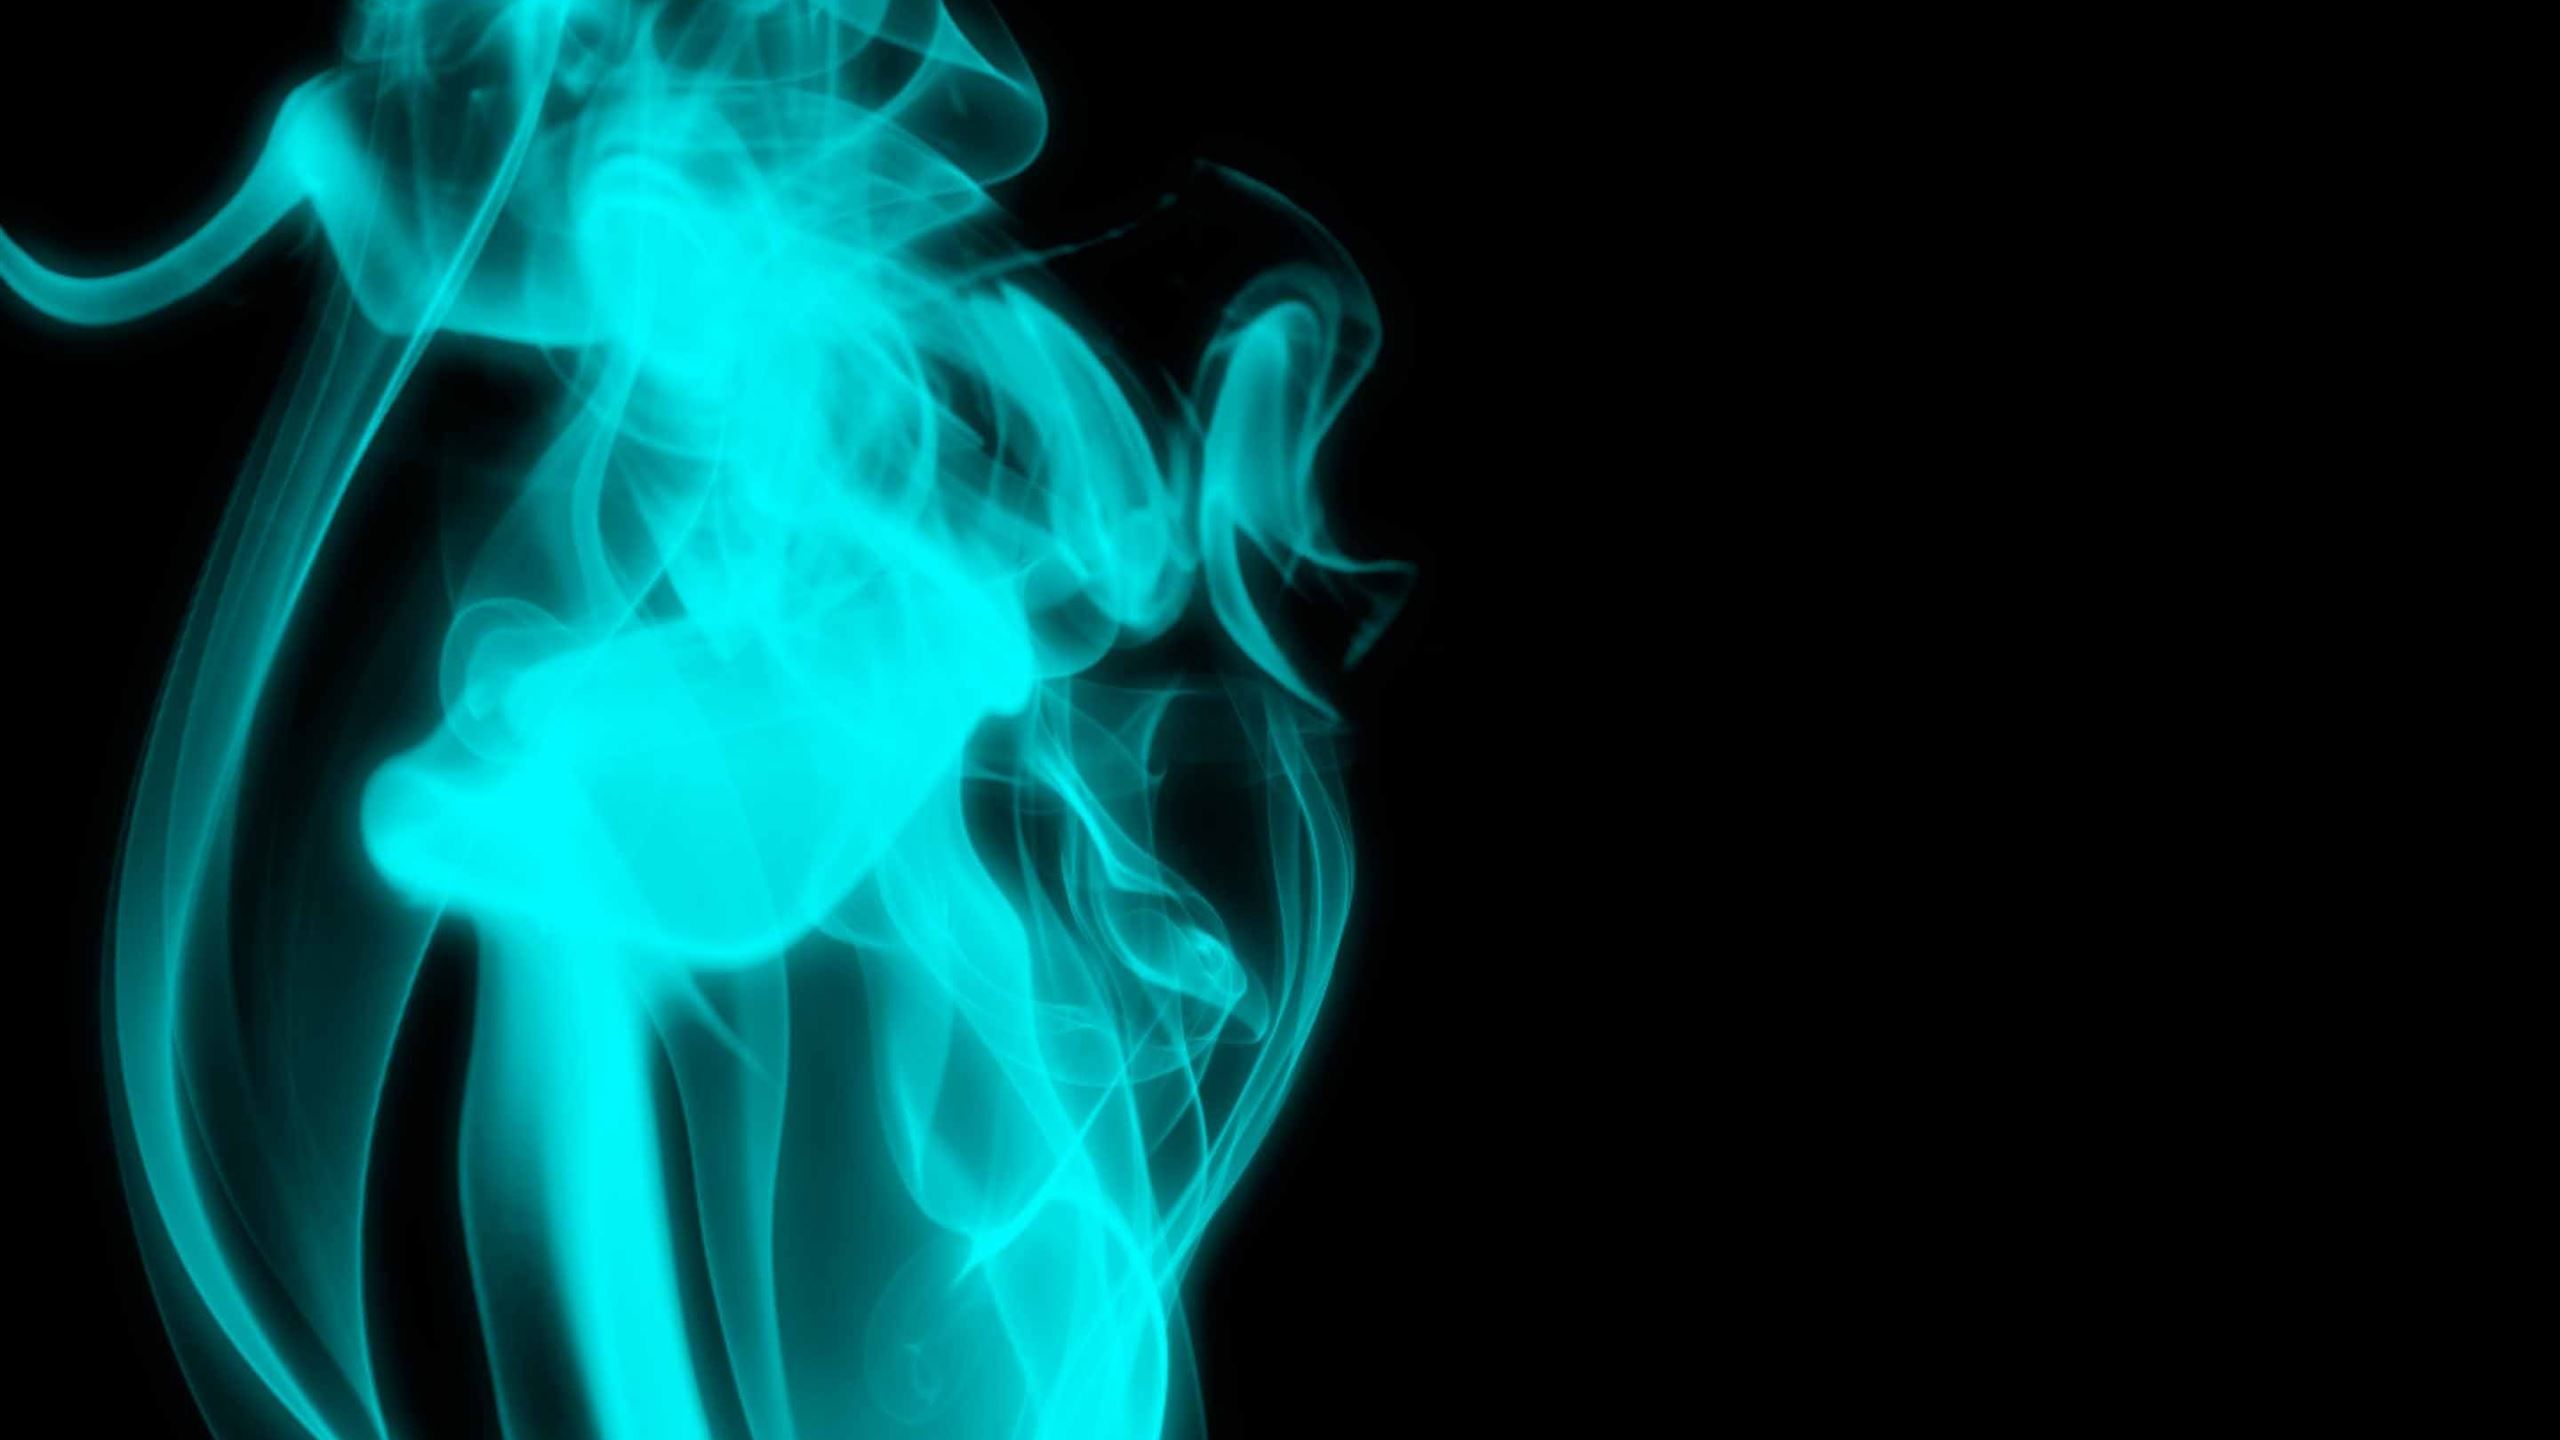 Turquoise smoke on a black background - Smoke